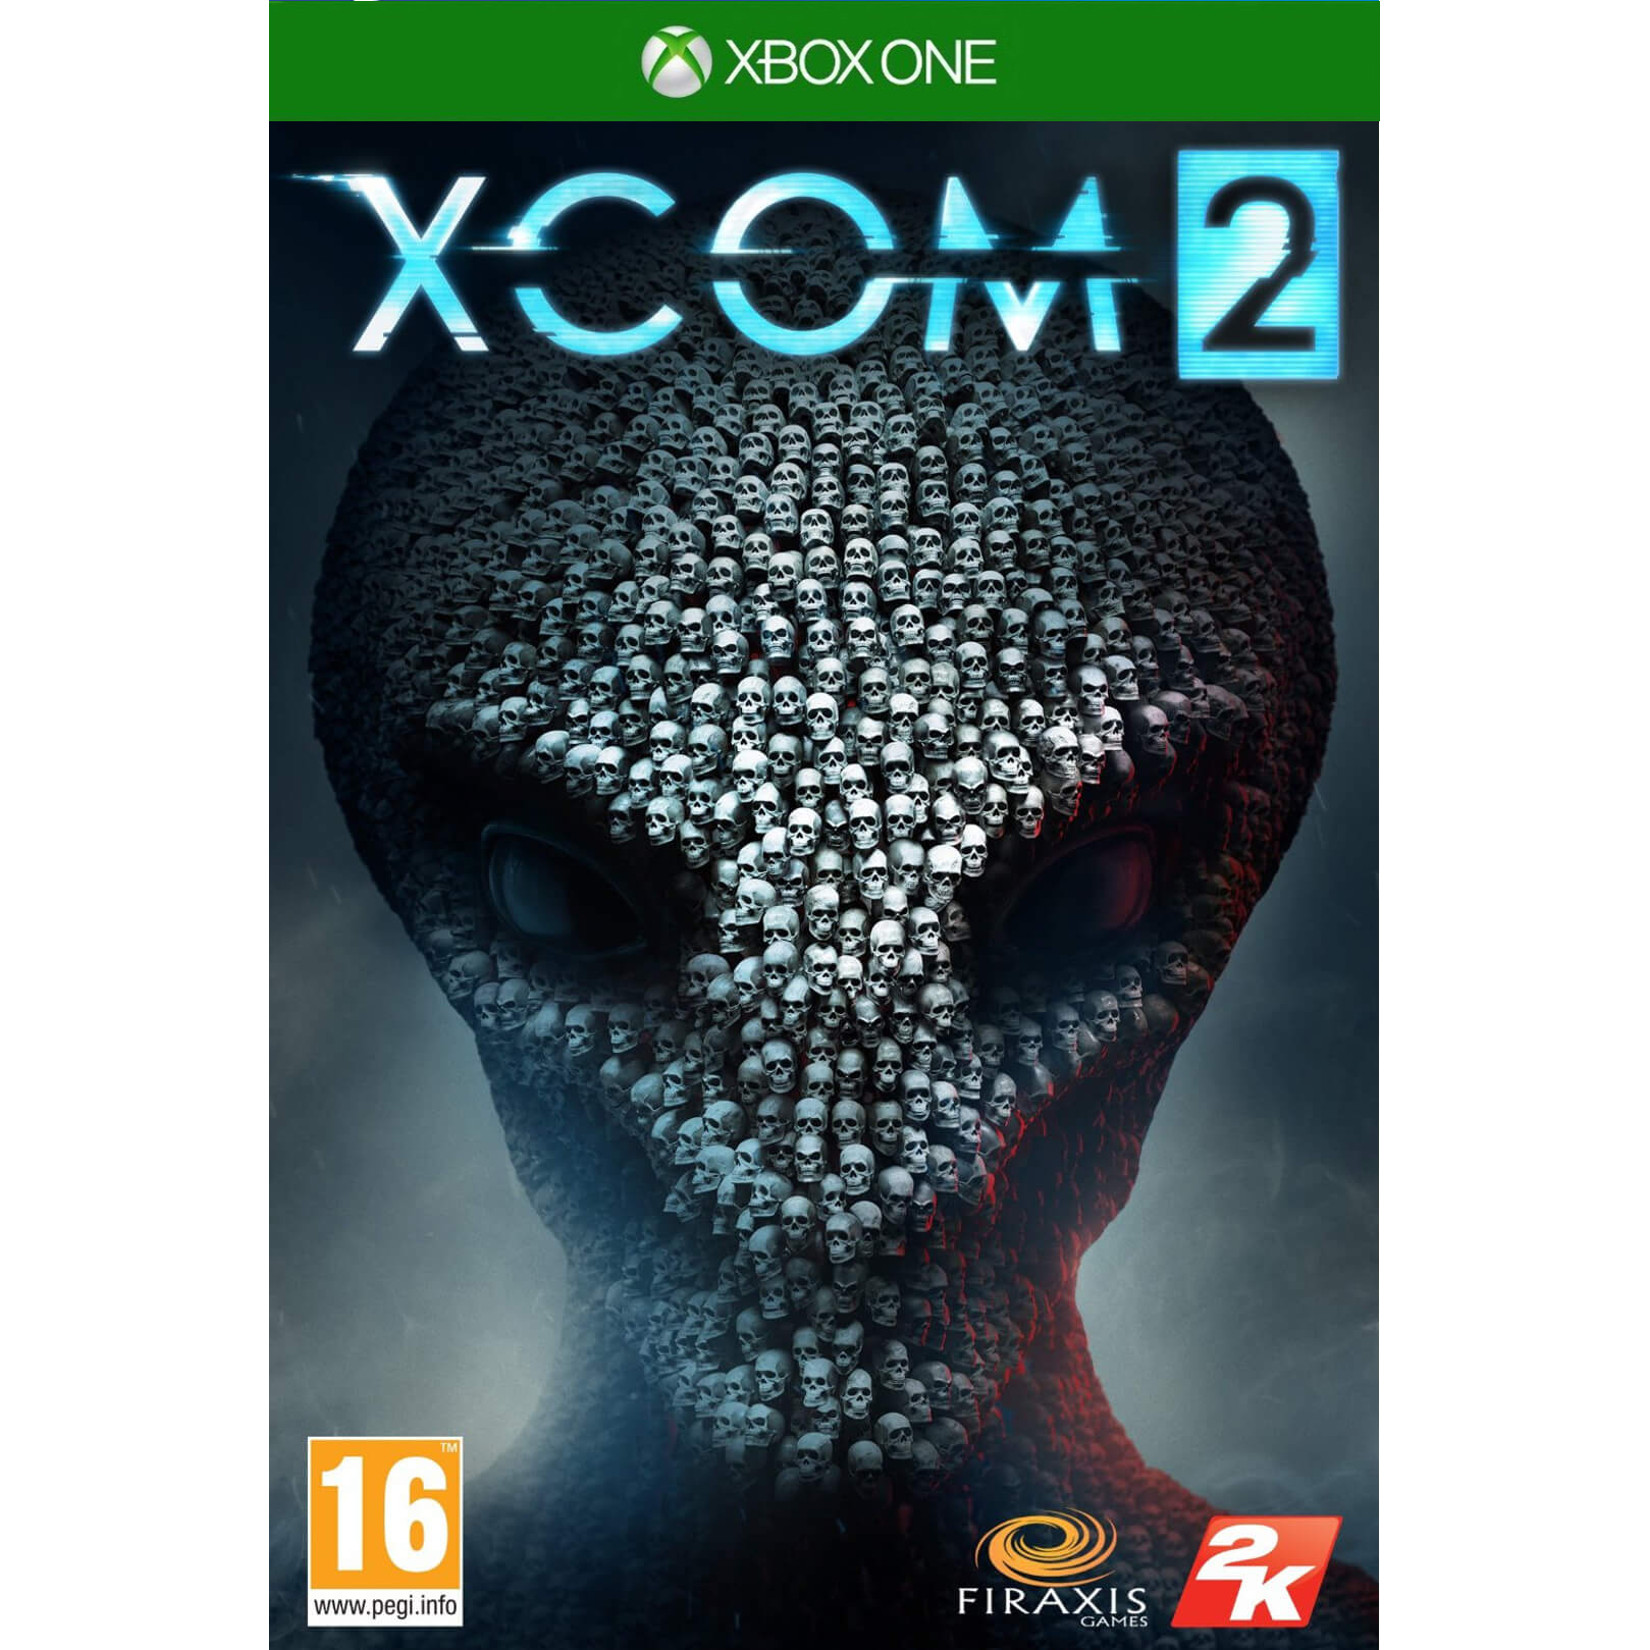  Joc Xbox One XCOM 2 